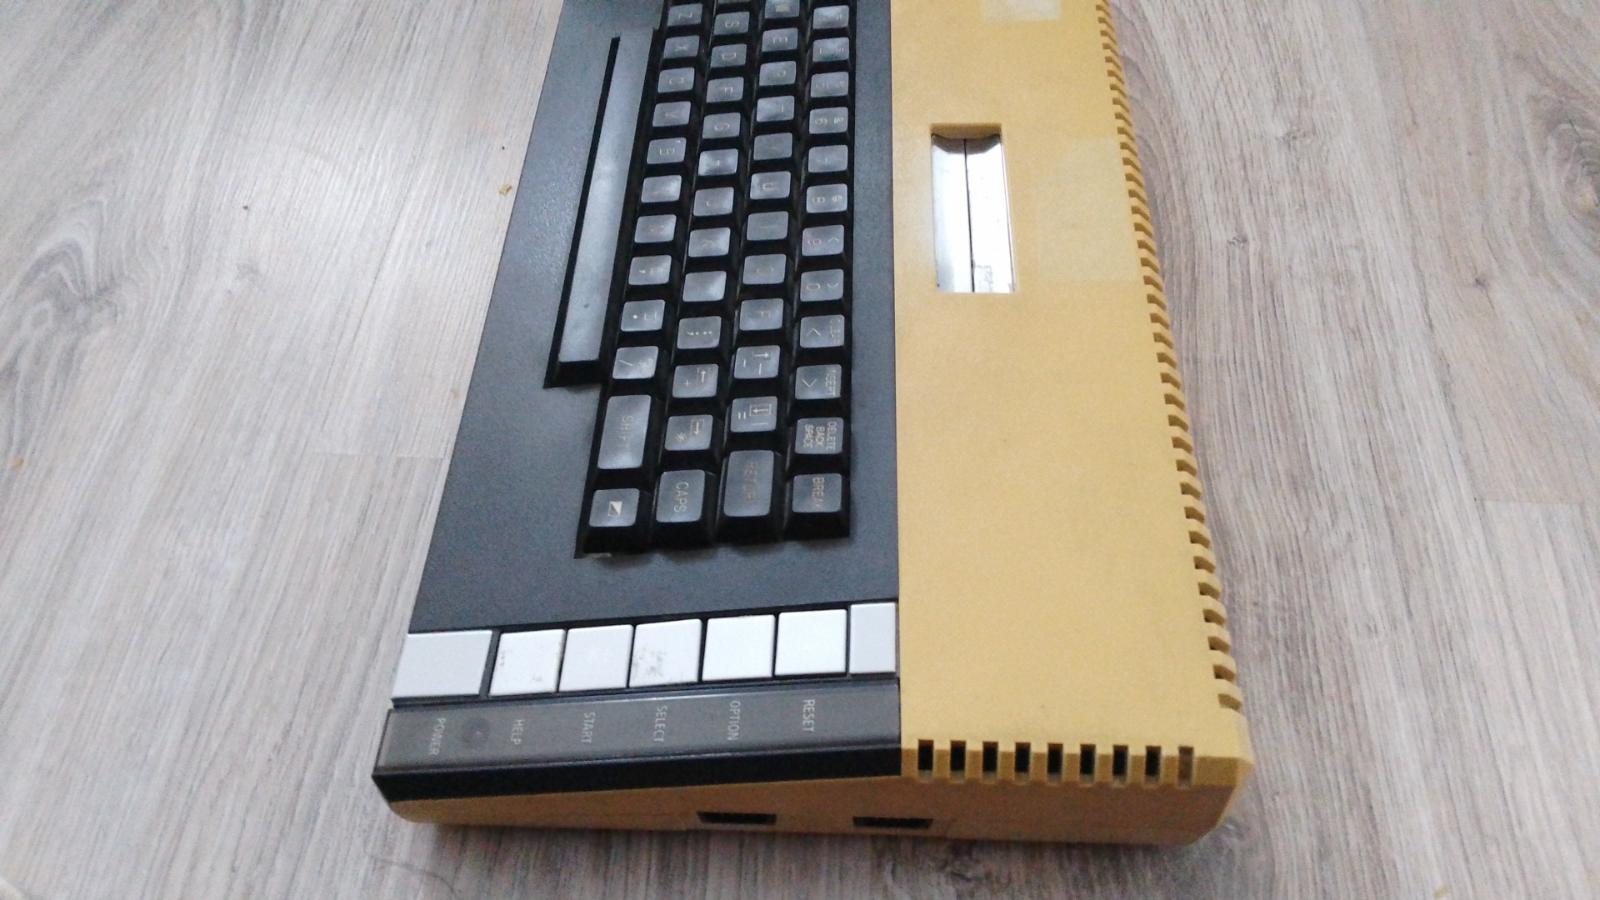 Počítač Atari 800 XL  - Počítače a hry